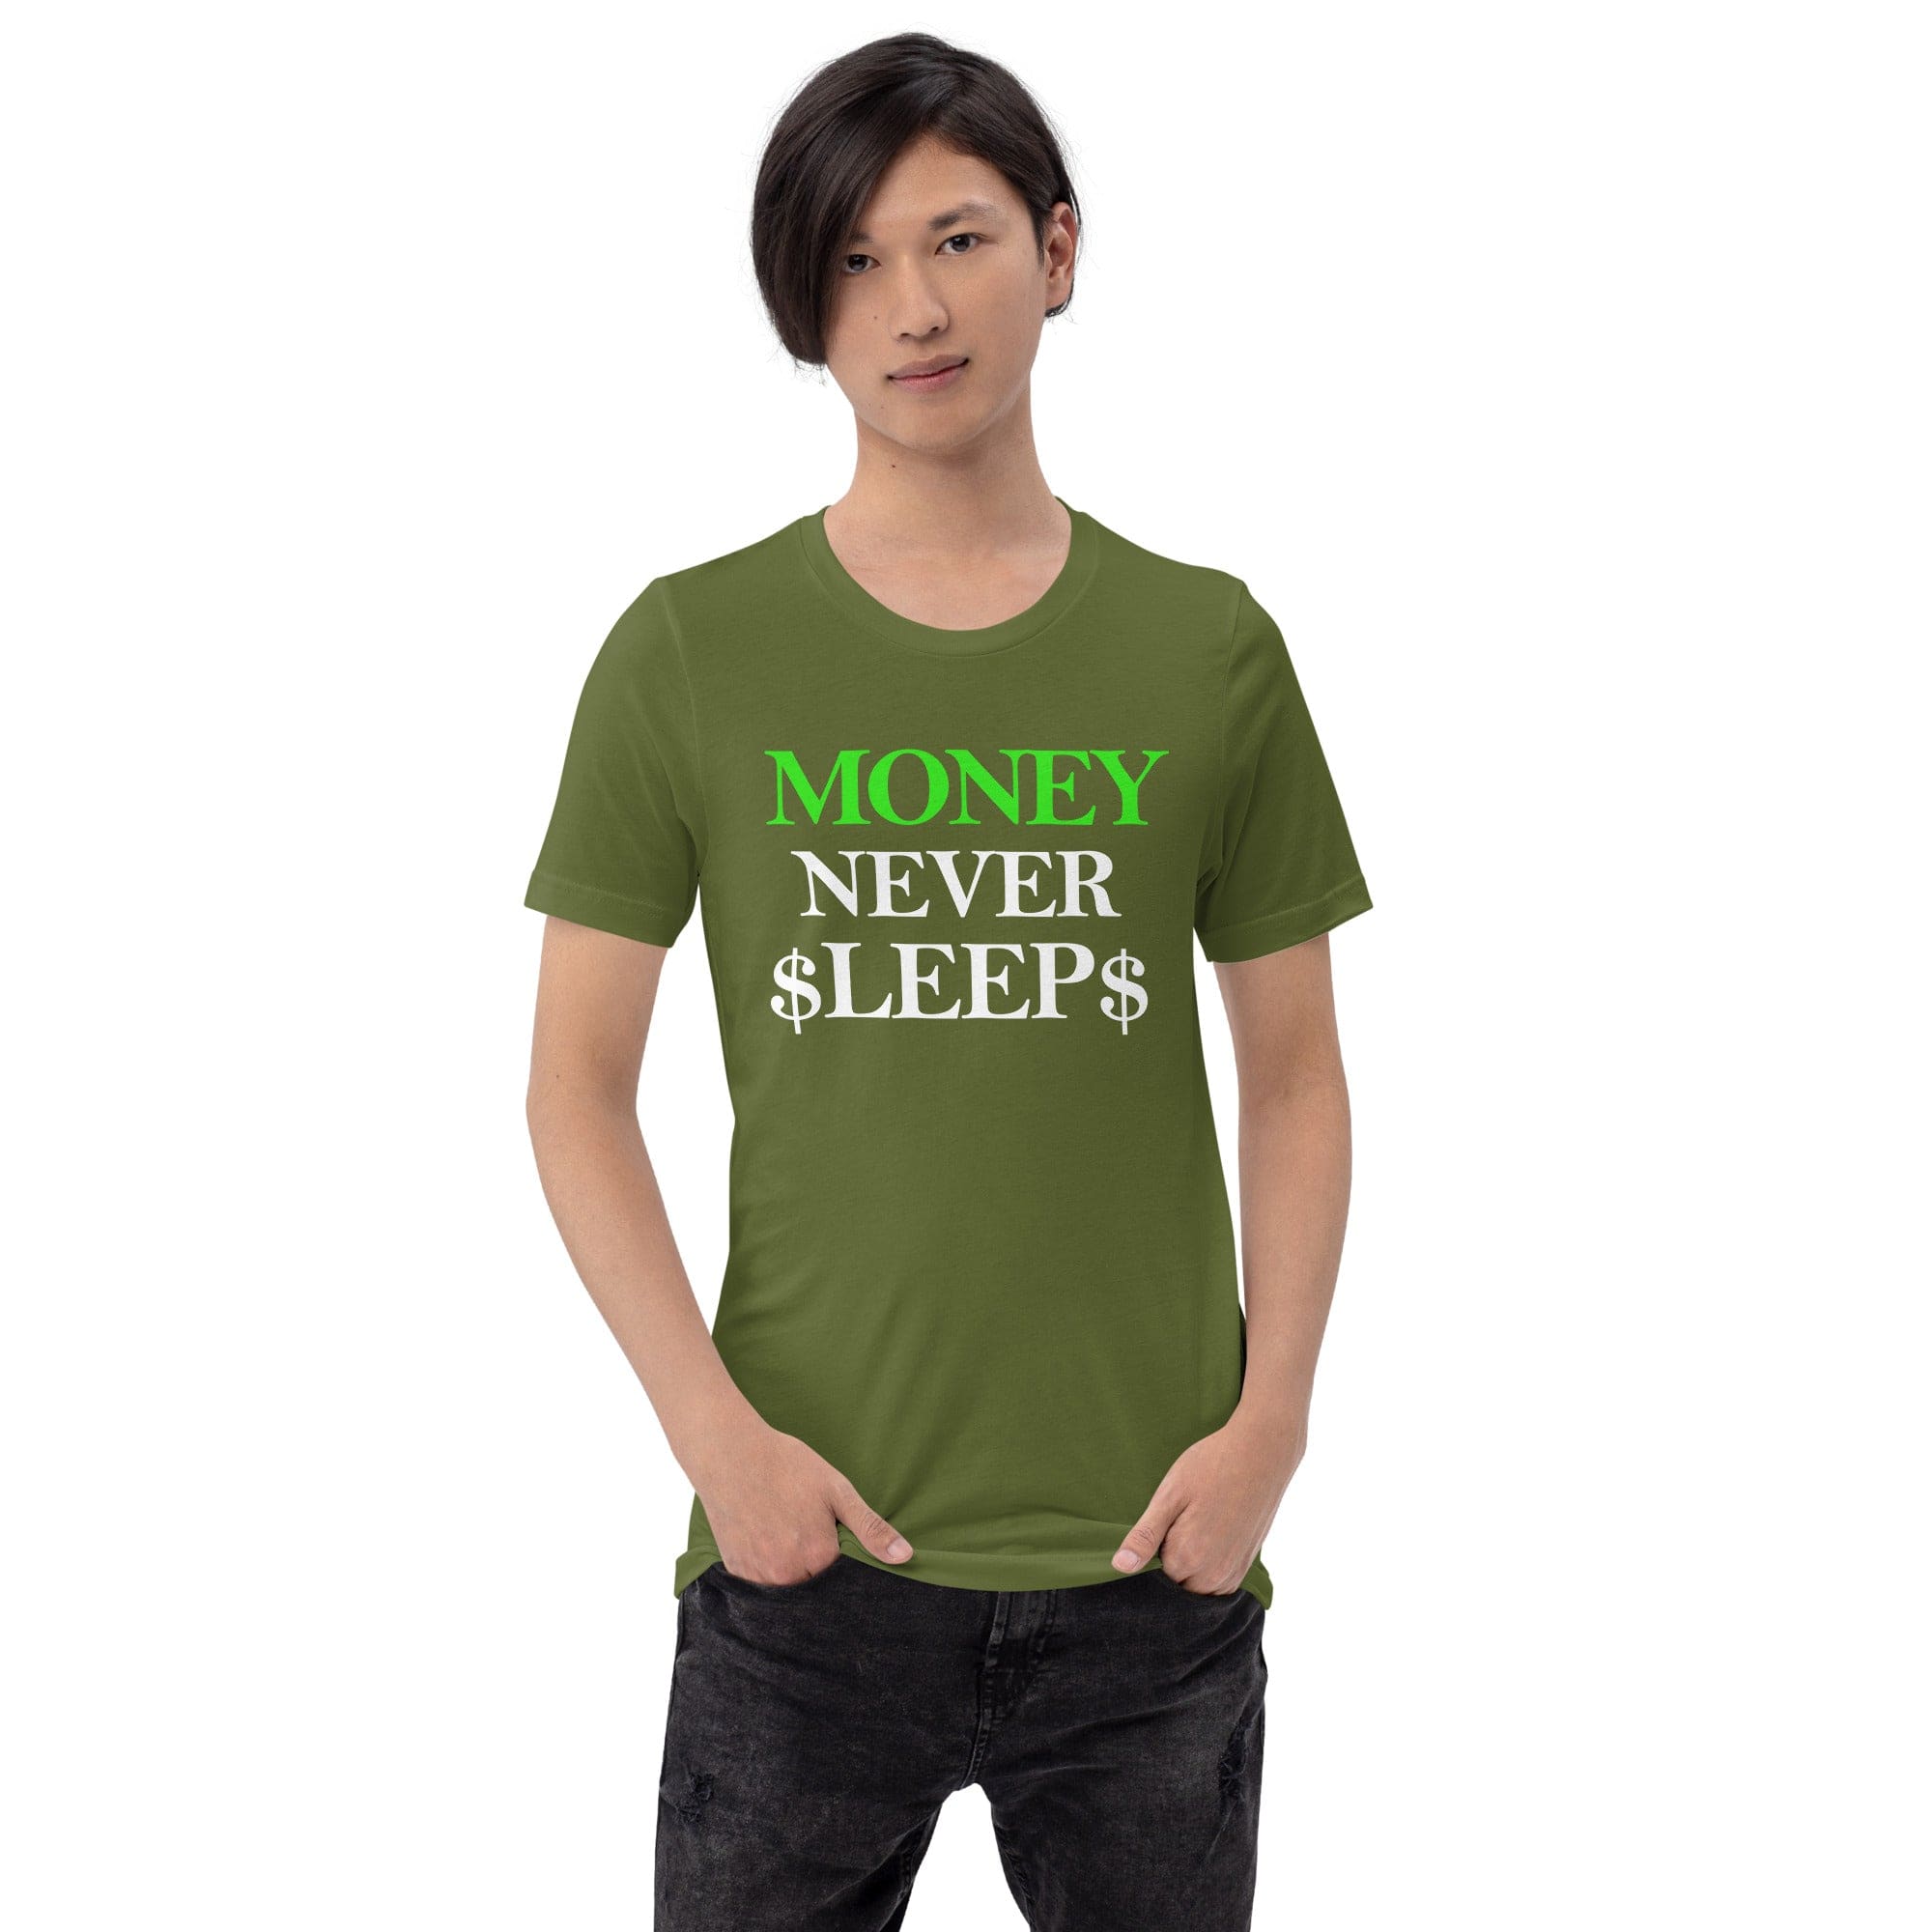 Absolutestacker2 Olive / S Money never sleep